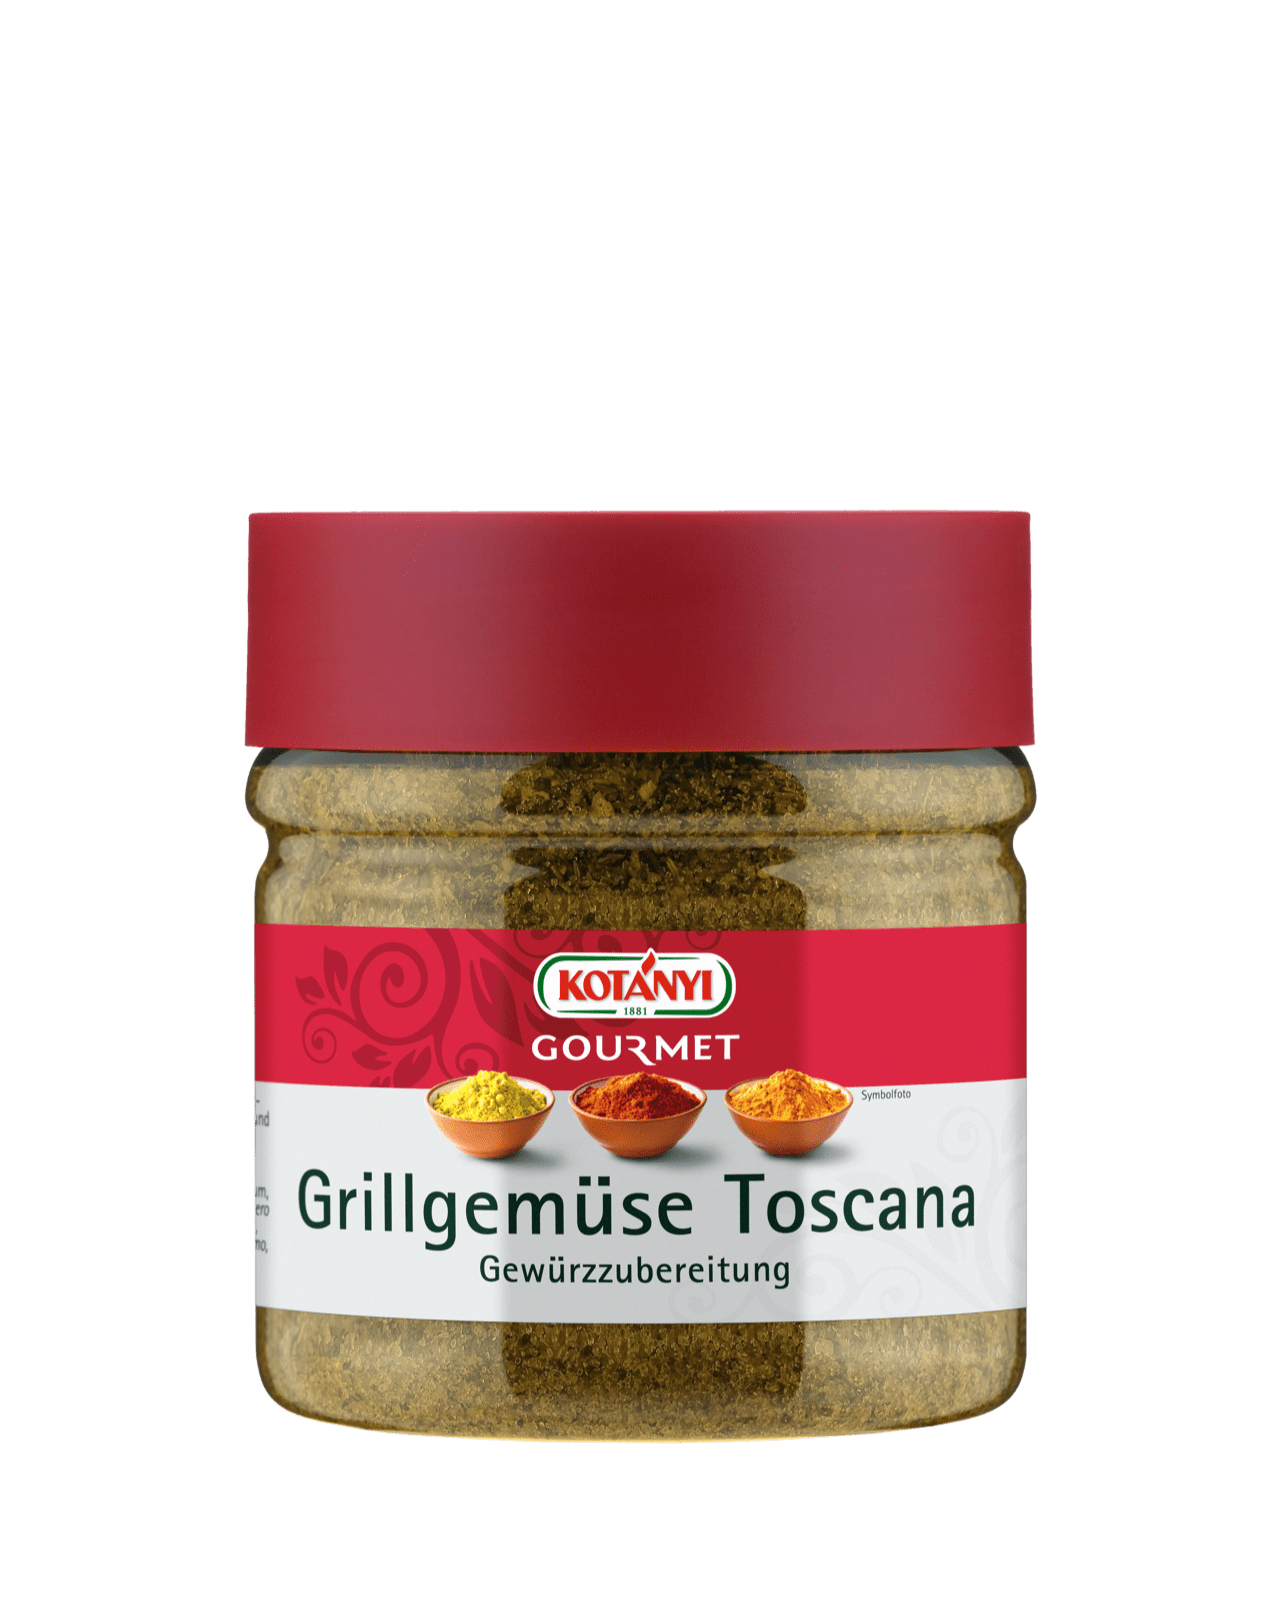 Kotányi Gourmet Grillgemüse Toscana Gewürzzubereitung in der 400ccm Dose